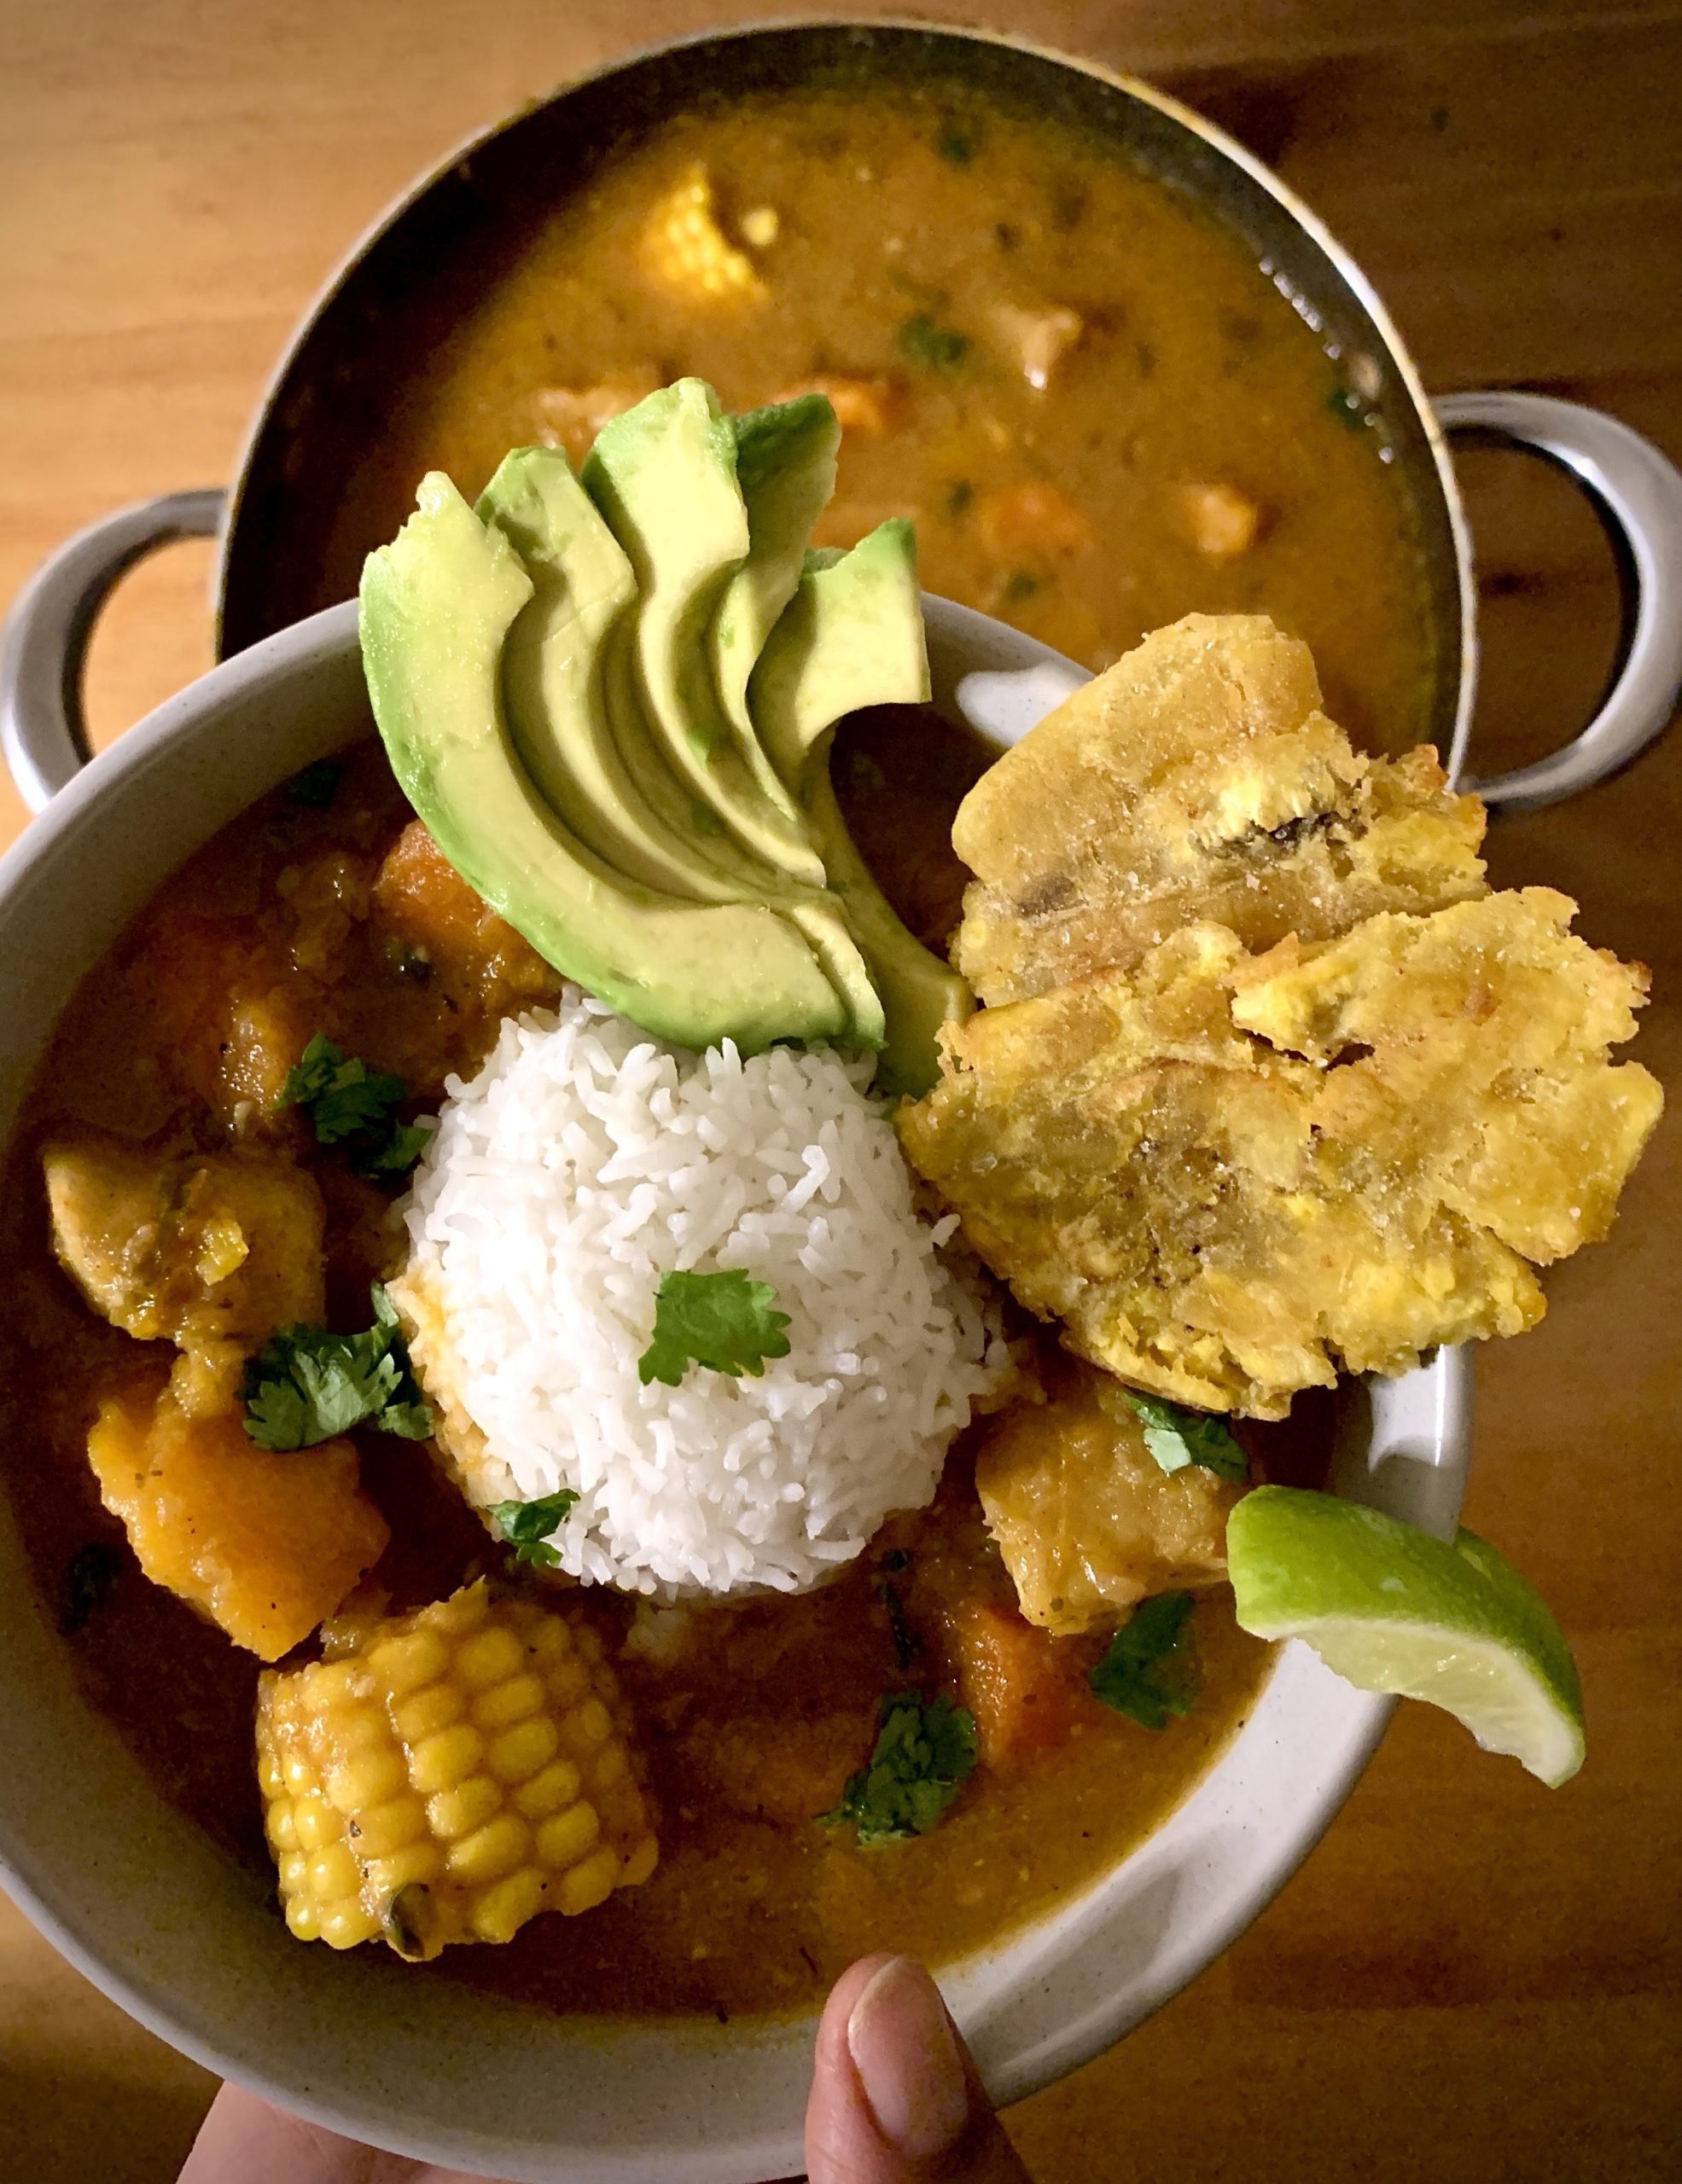 Vegan sancocho- Traditional hearty Dominican stew